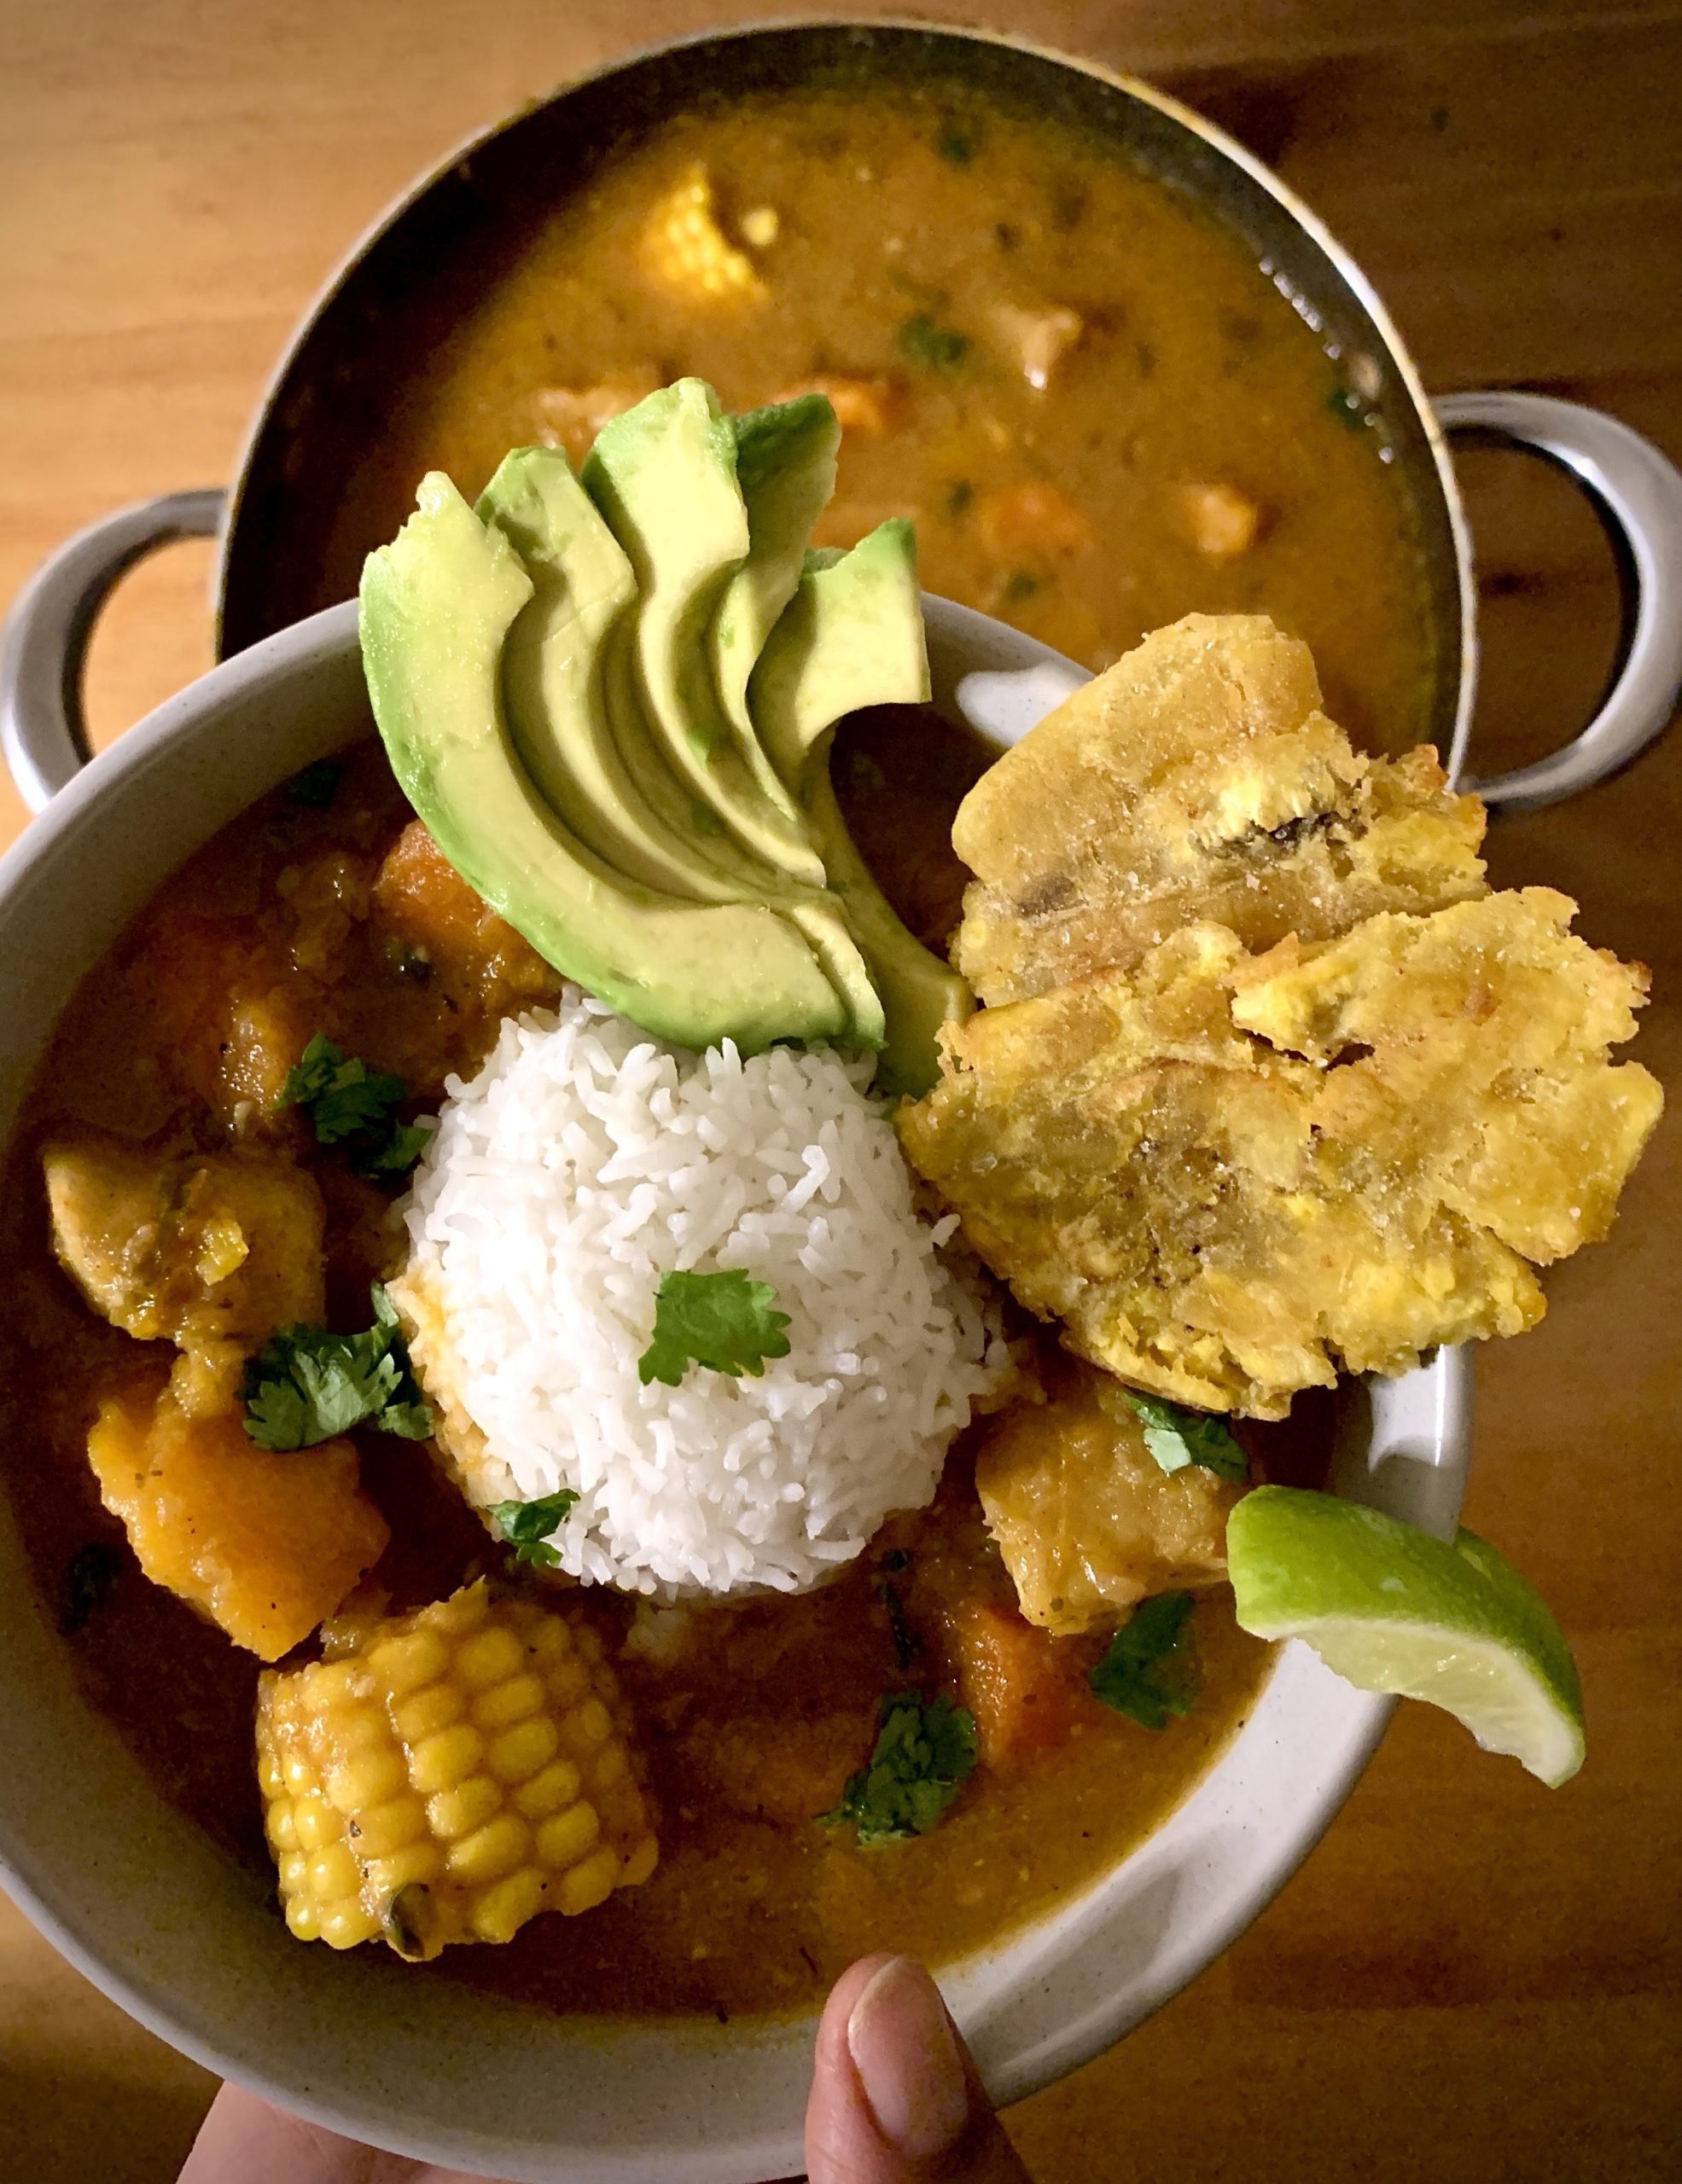 Vegan sancocho- Traditional hearty Dominican stew